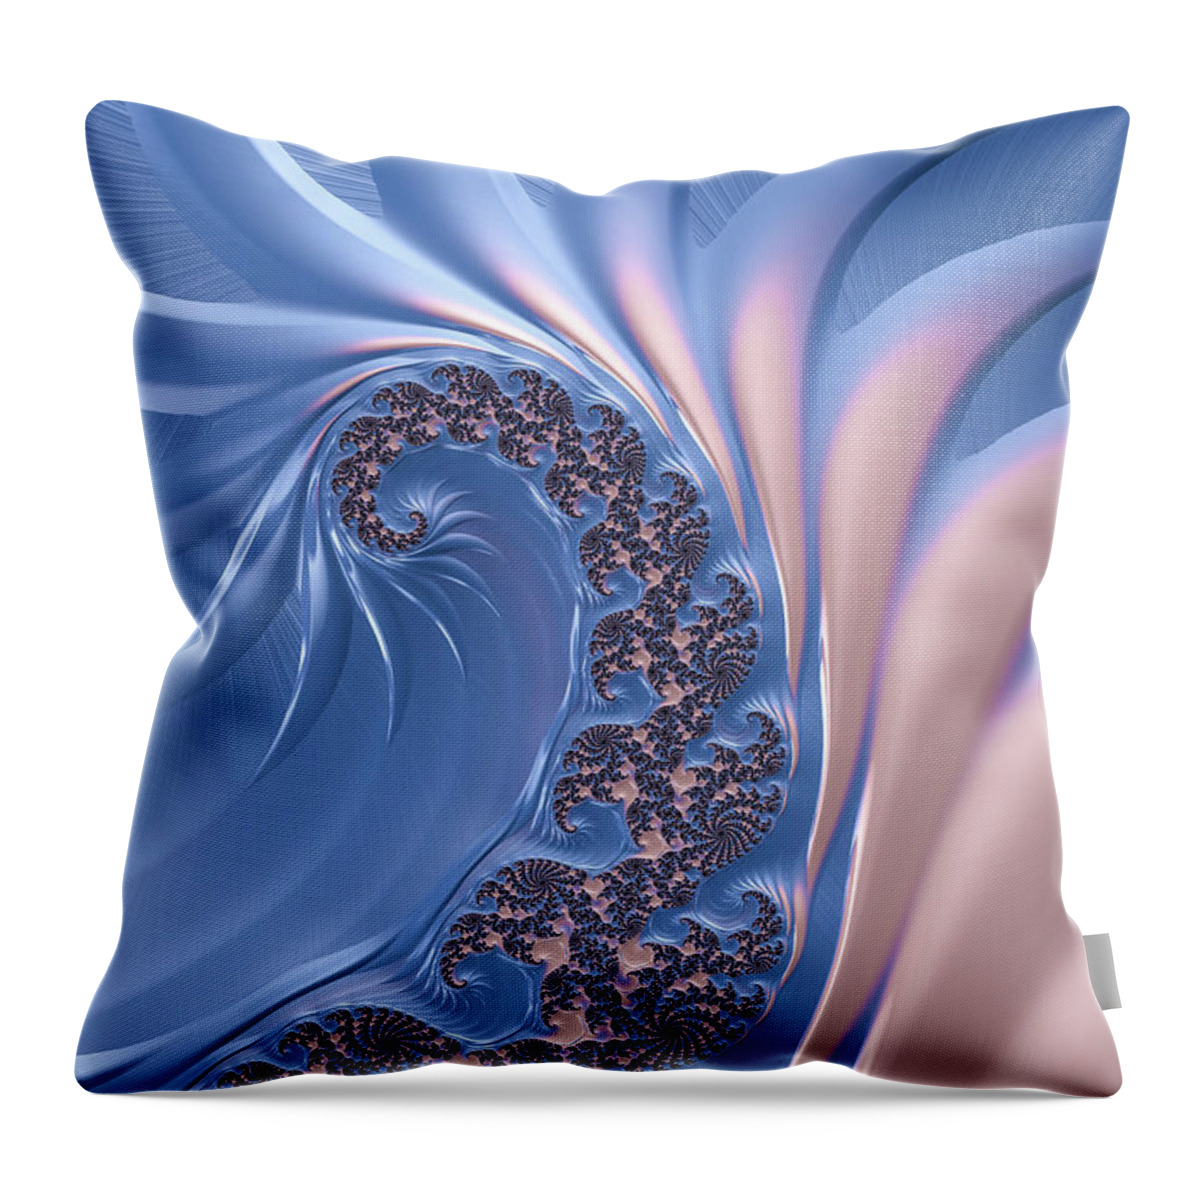 Fractal Throw Pillow featuring the digital art Pink and Blue Abstract Fractal Spiral Art 01 by Matthias Hauser